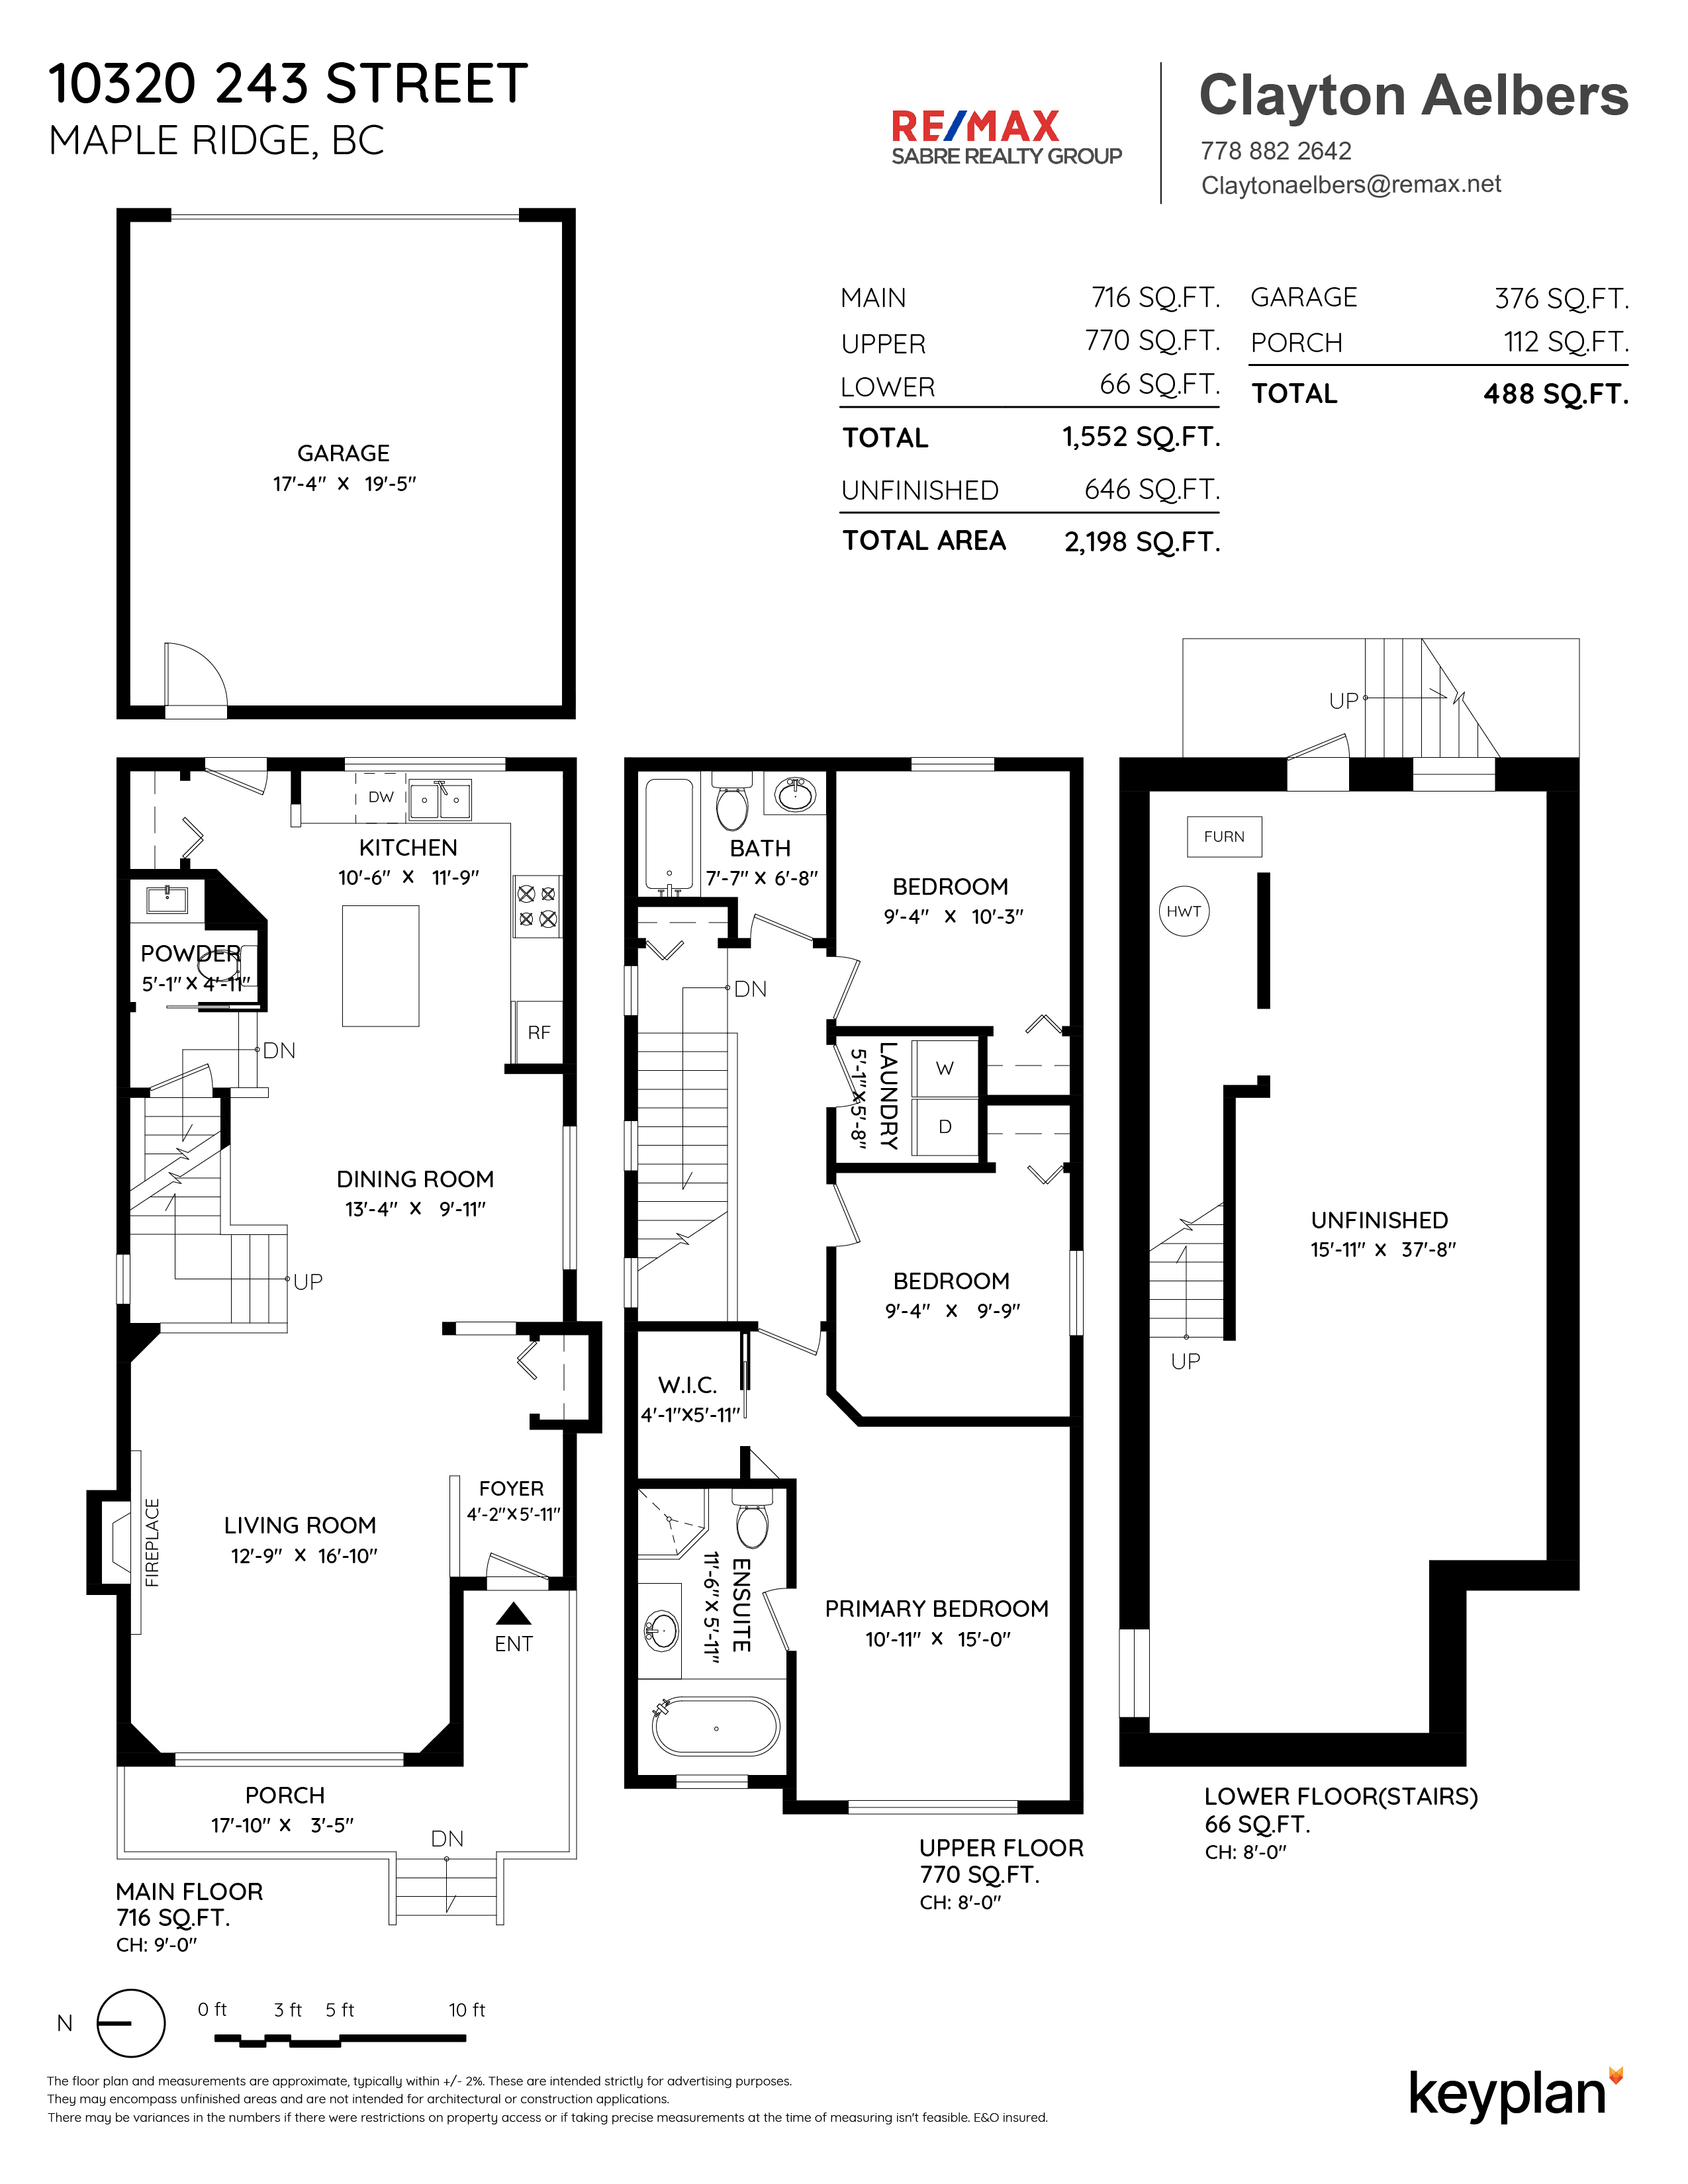 Clayton Aelbers - 10320 243 Street, Maple Ridge, BC, Canada | Floor Plan 1